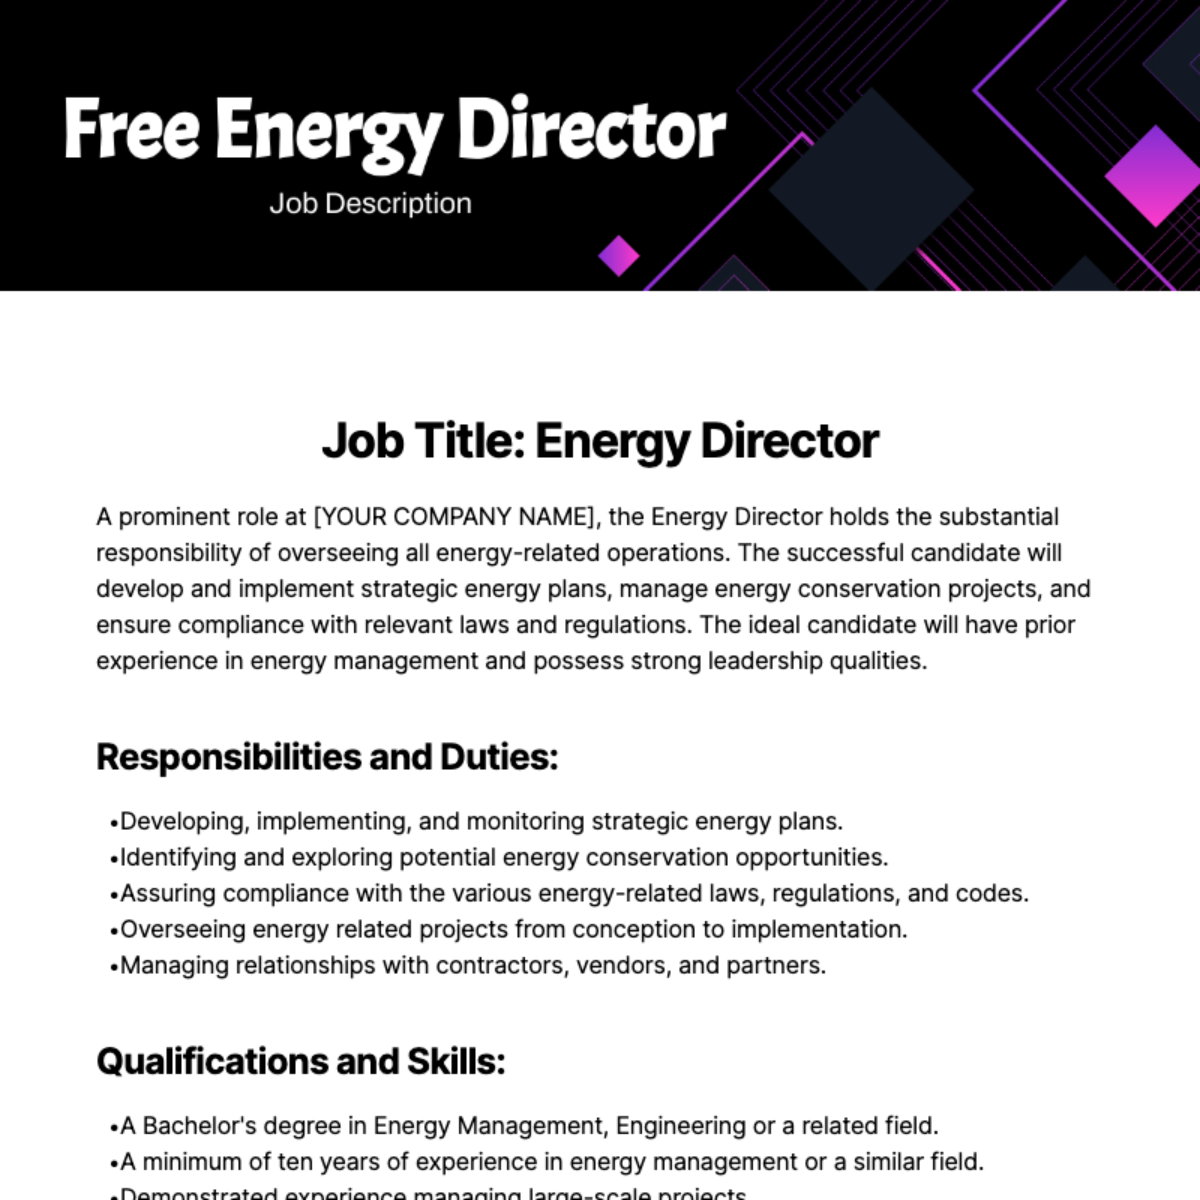 Free Energy Director Job Description Template